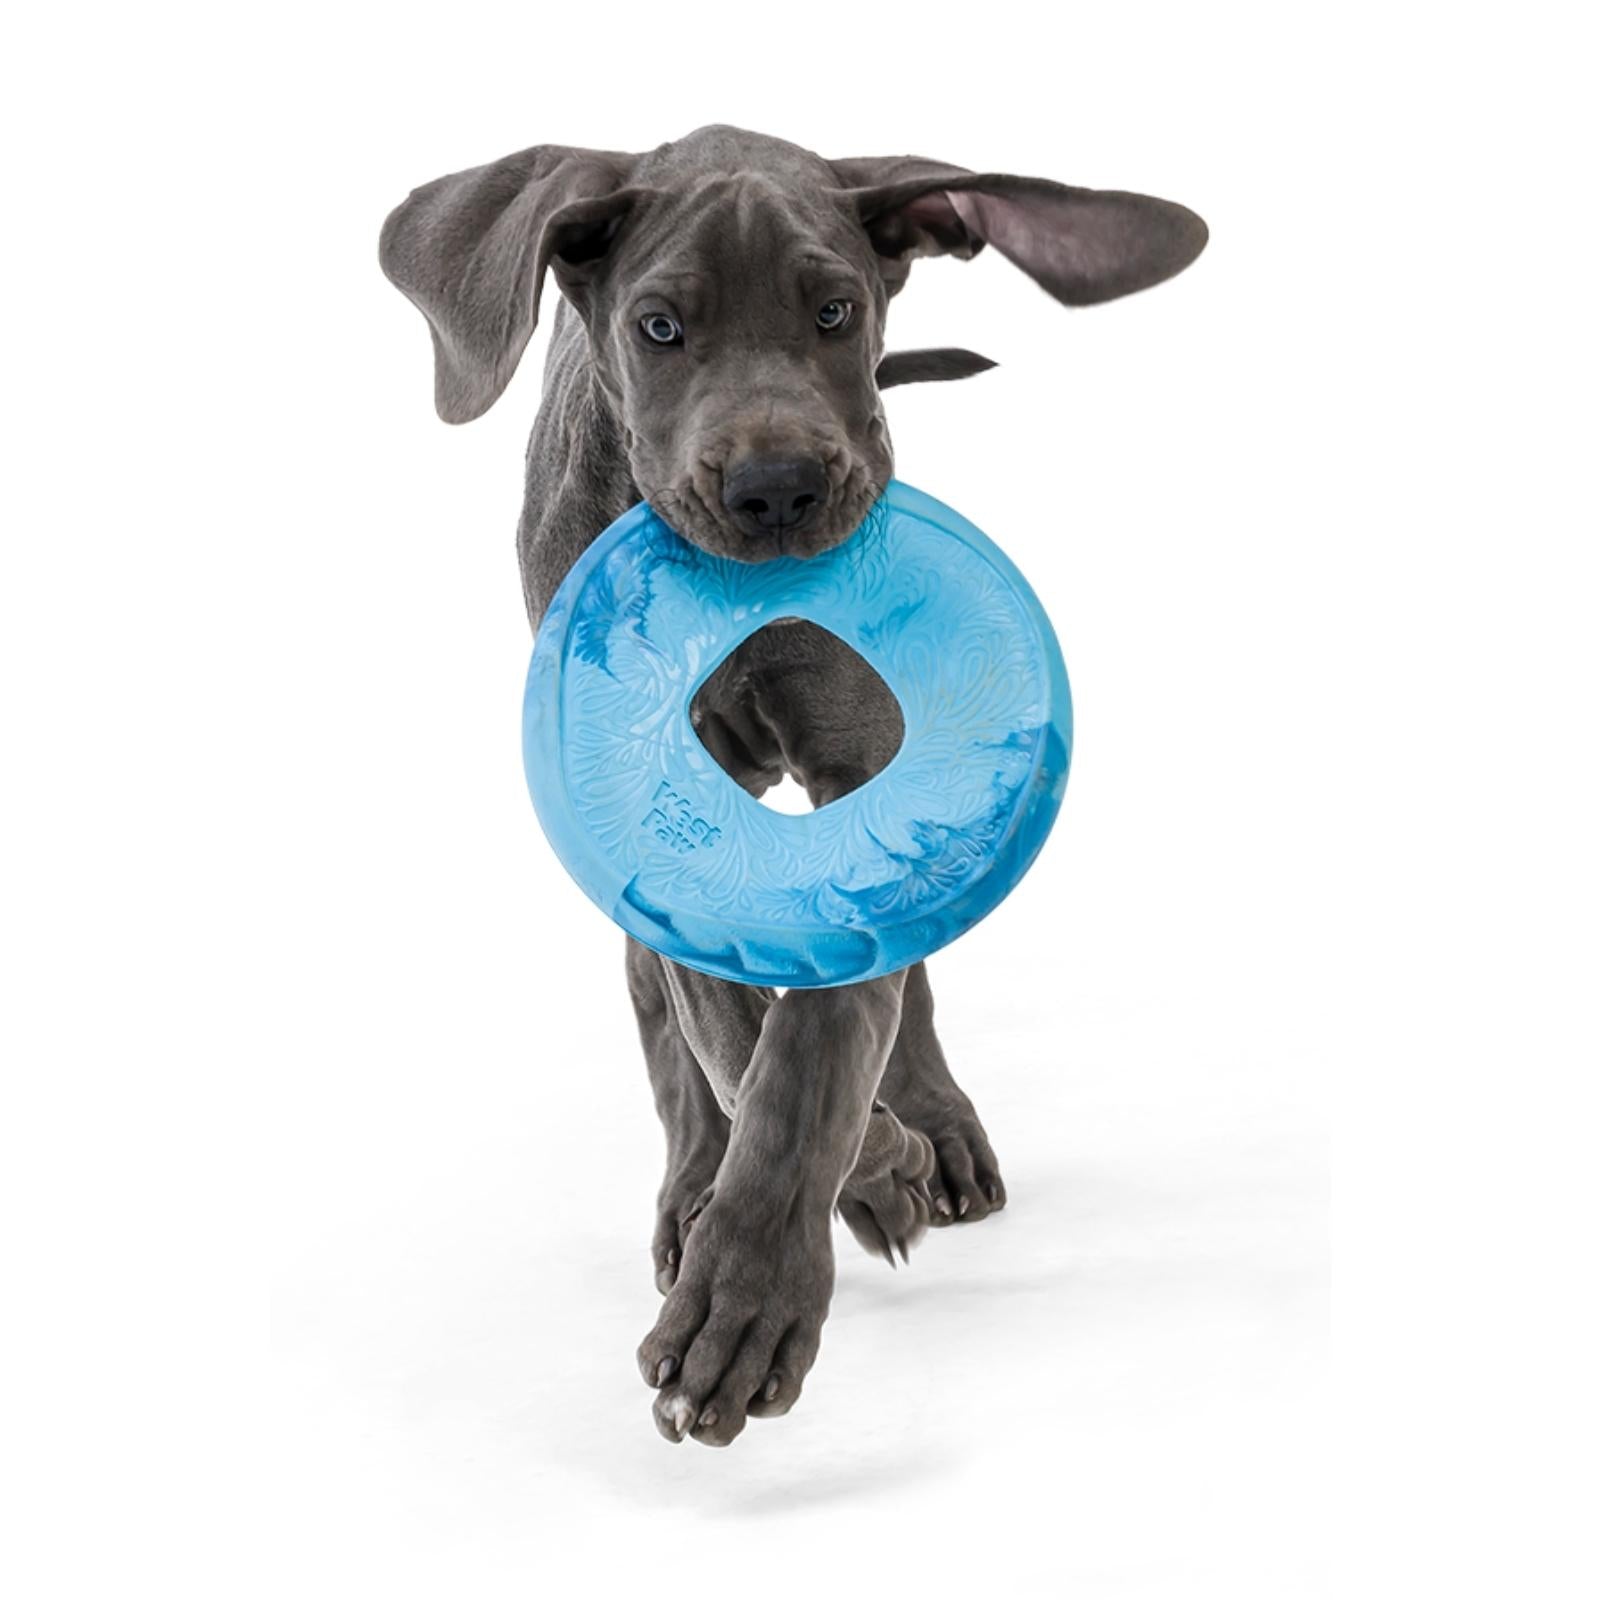 SAILZ de West Paw® color Azul Surf - Frisbee para Perros